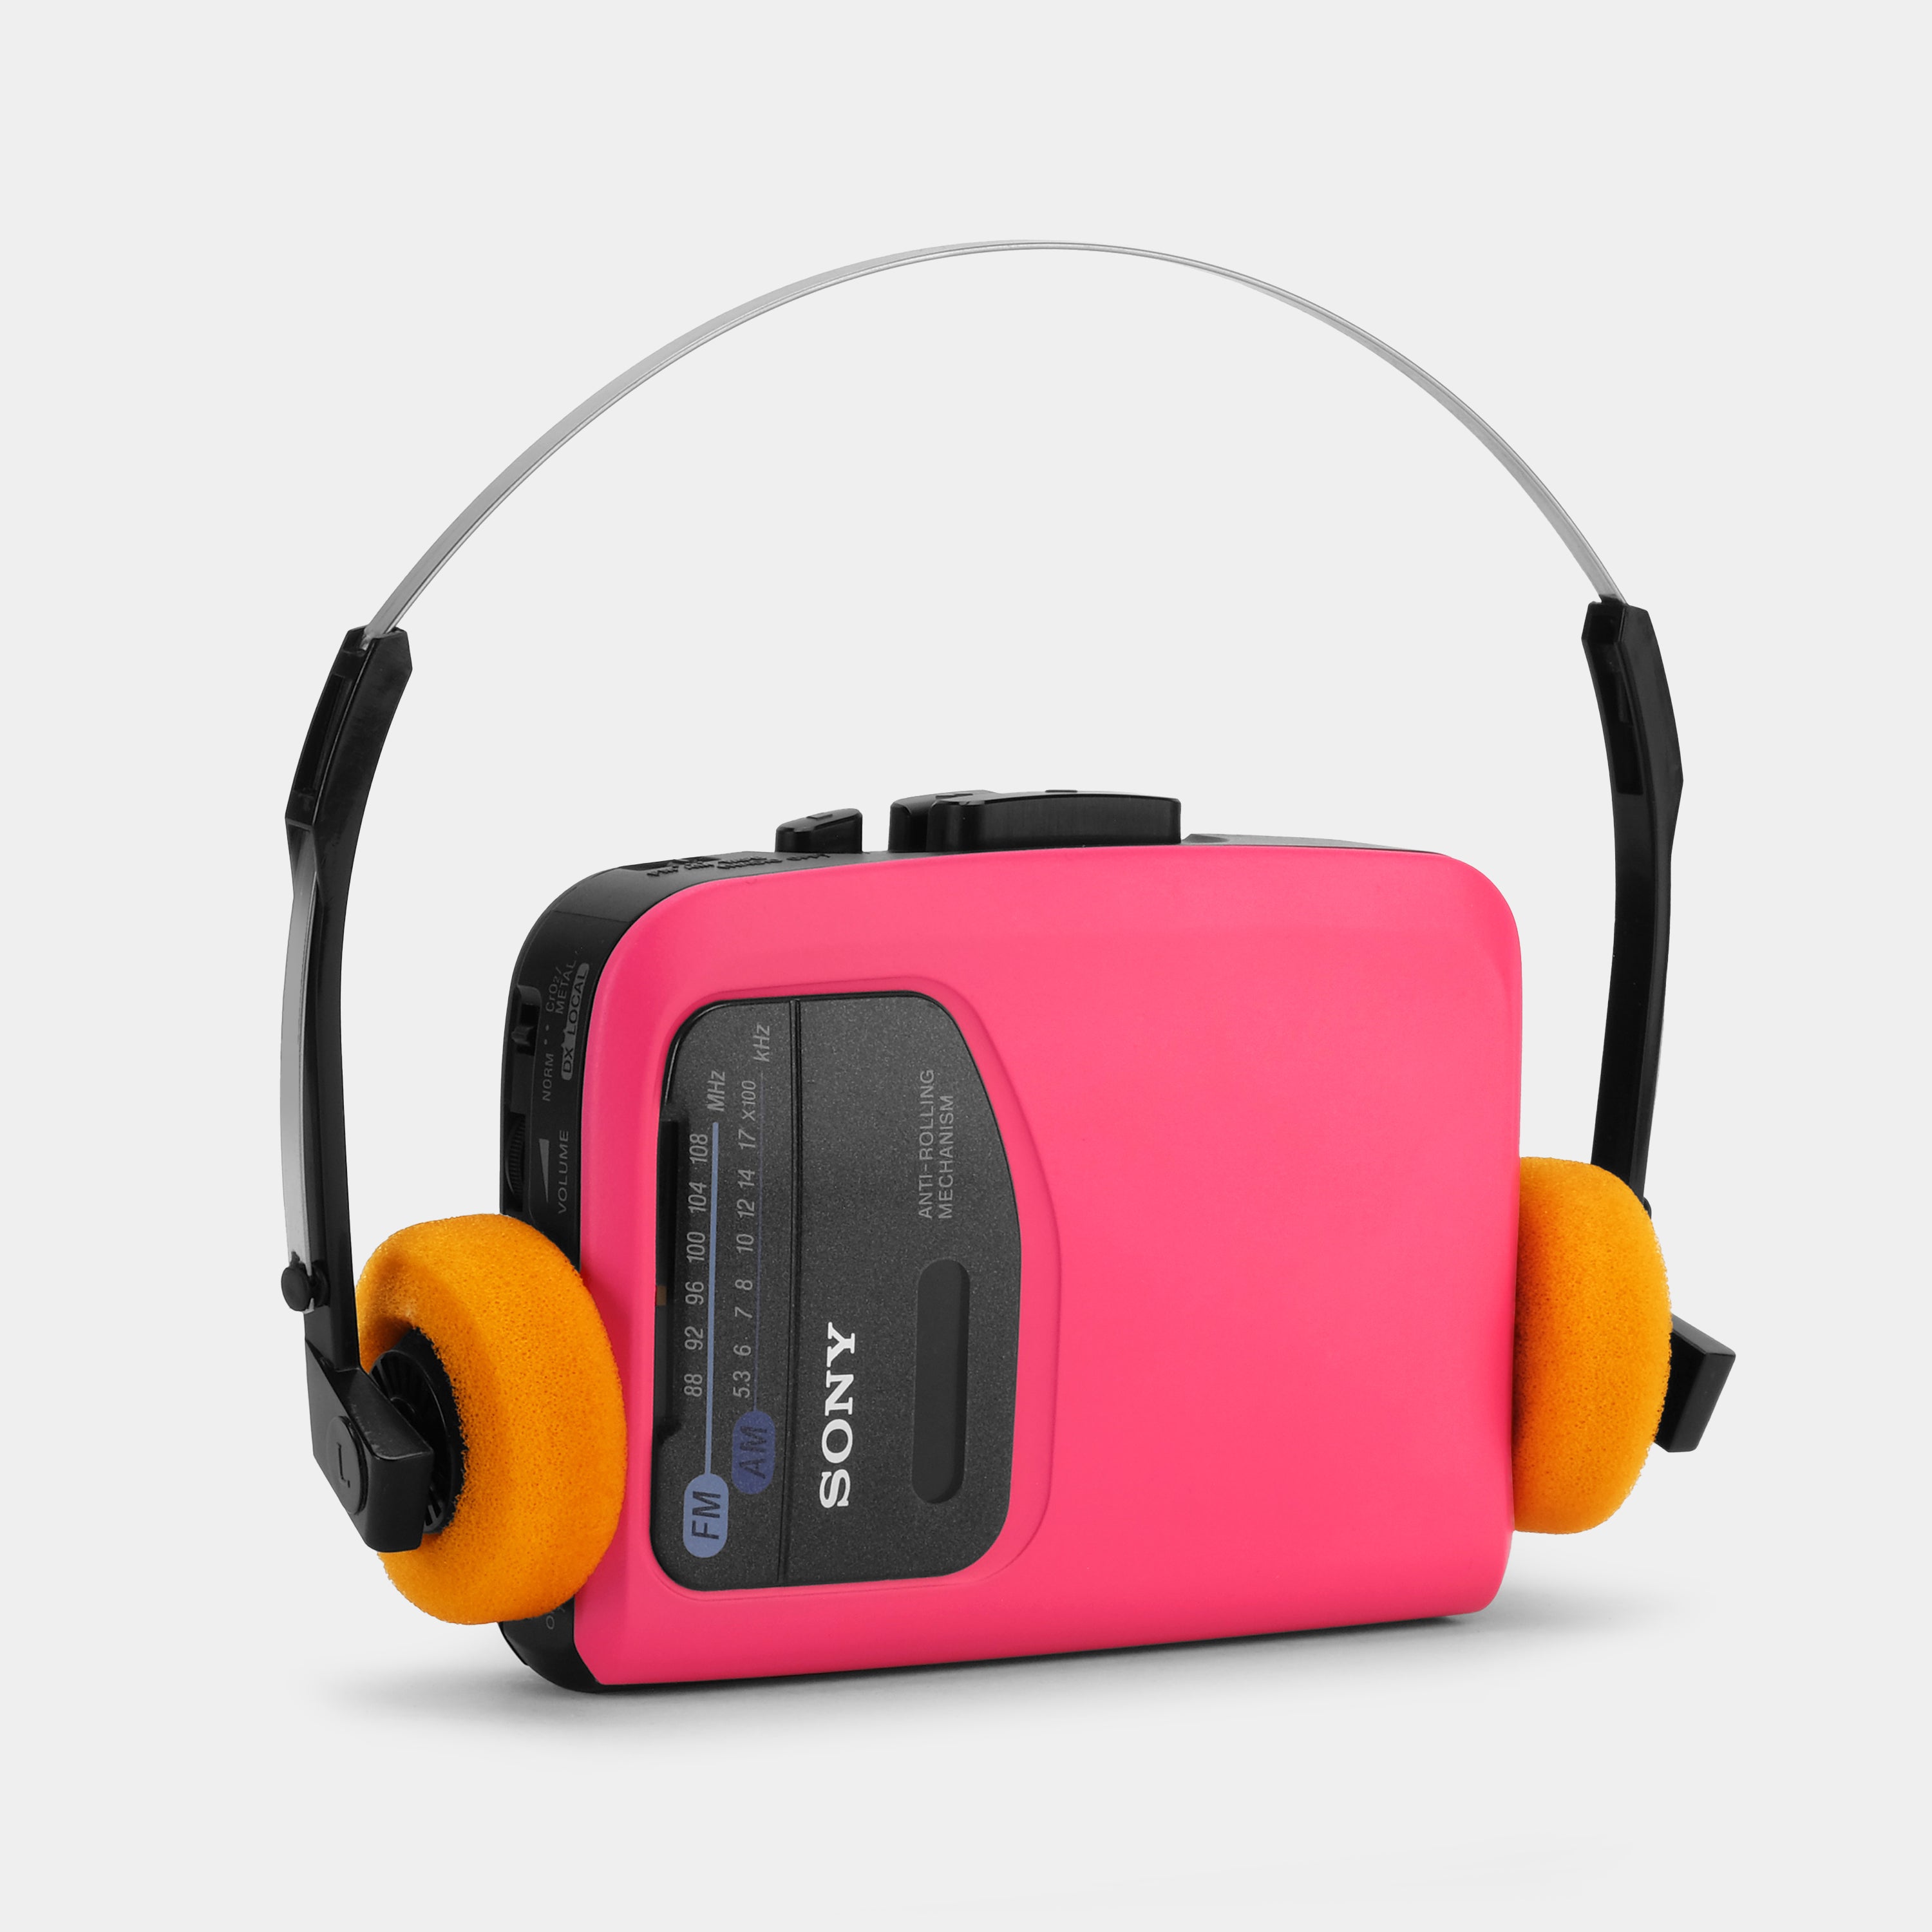 Sony Walkman WM-FX101 AM/FM Neon Pink Portable Cassette Player